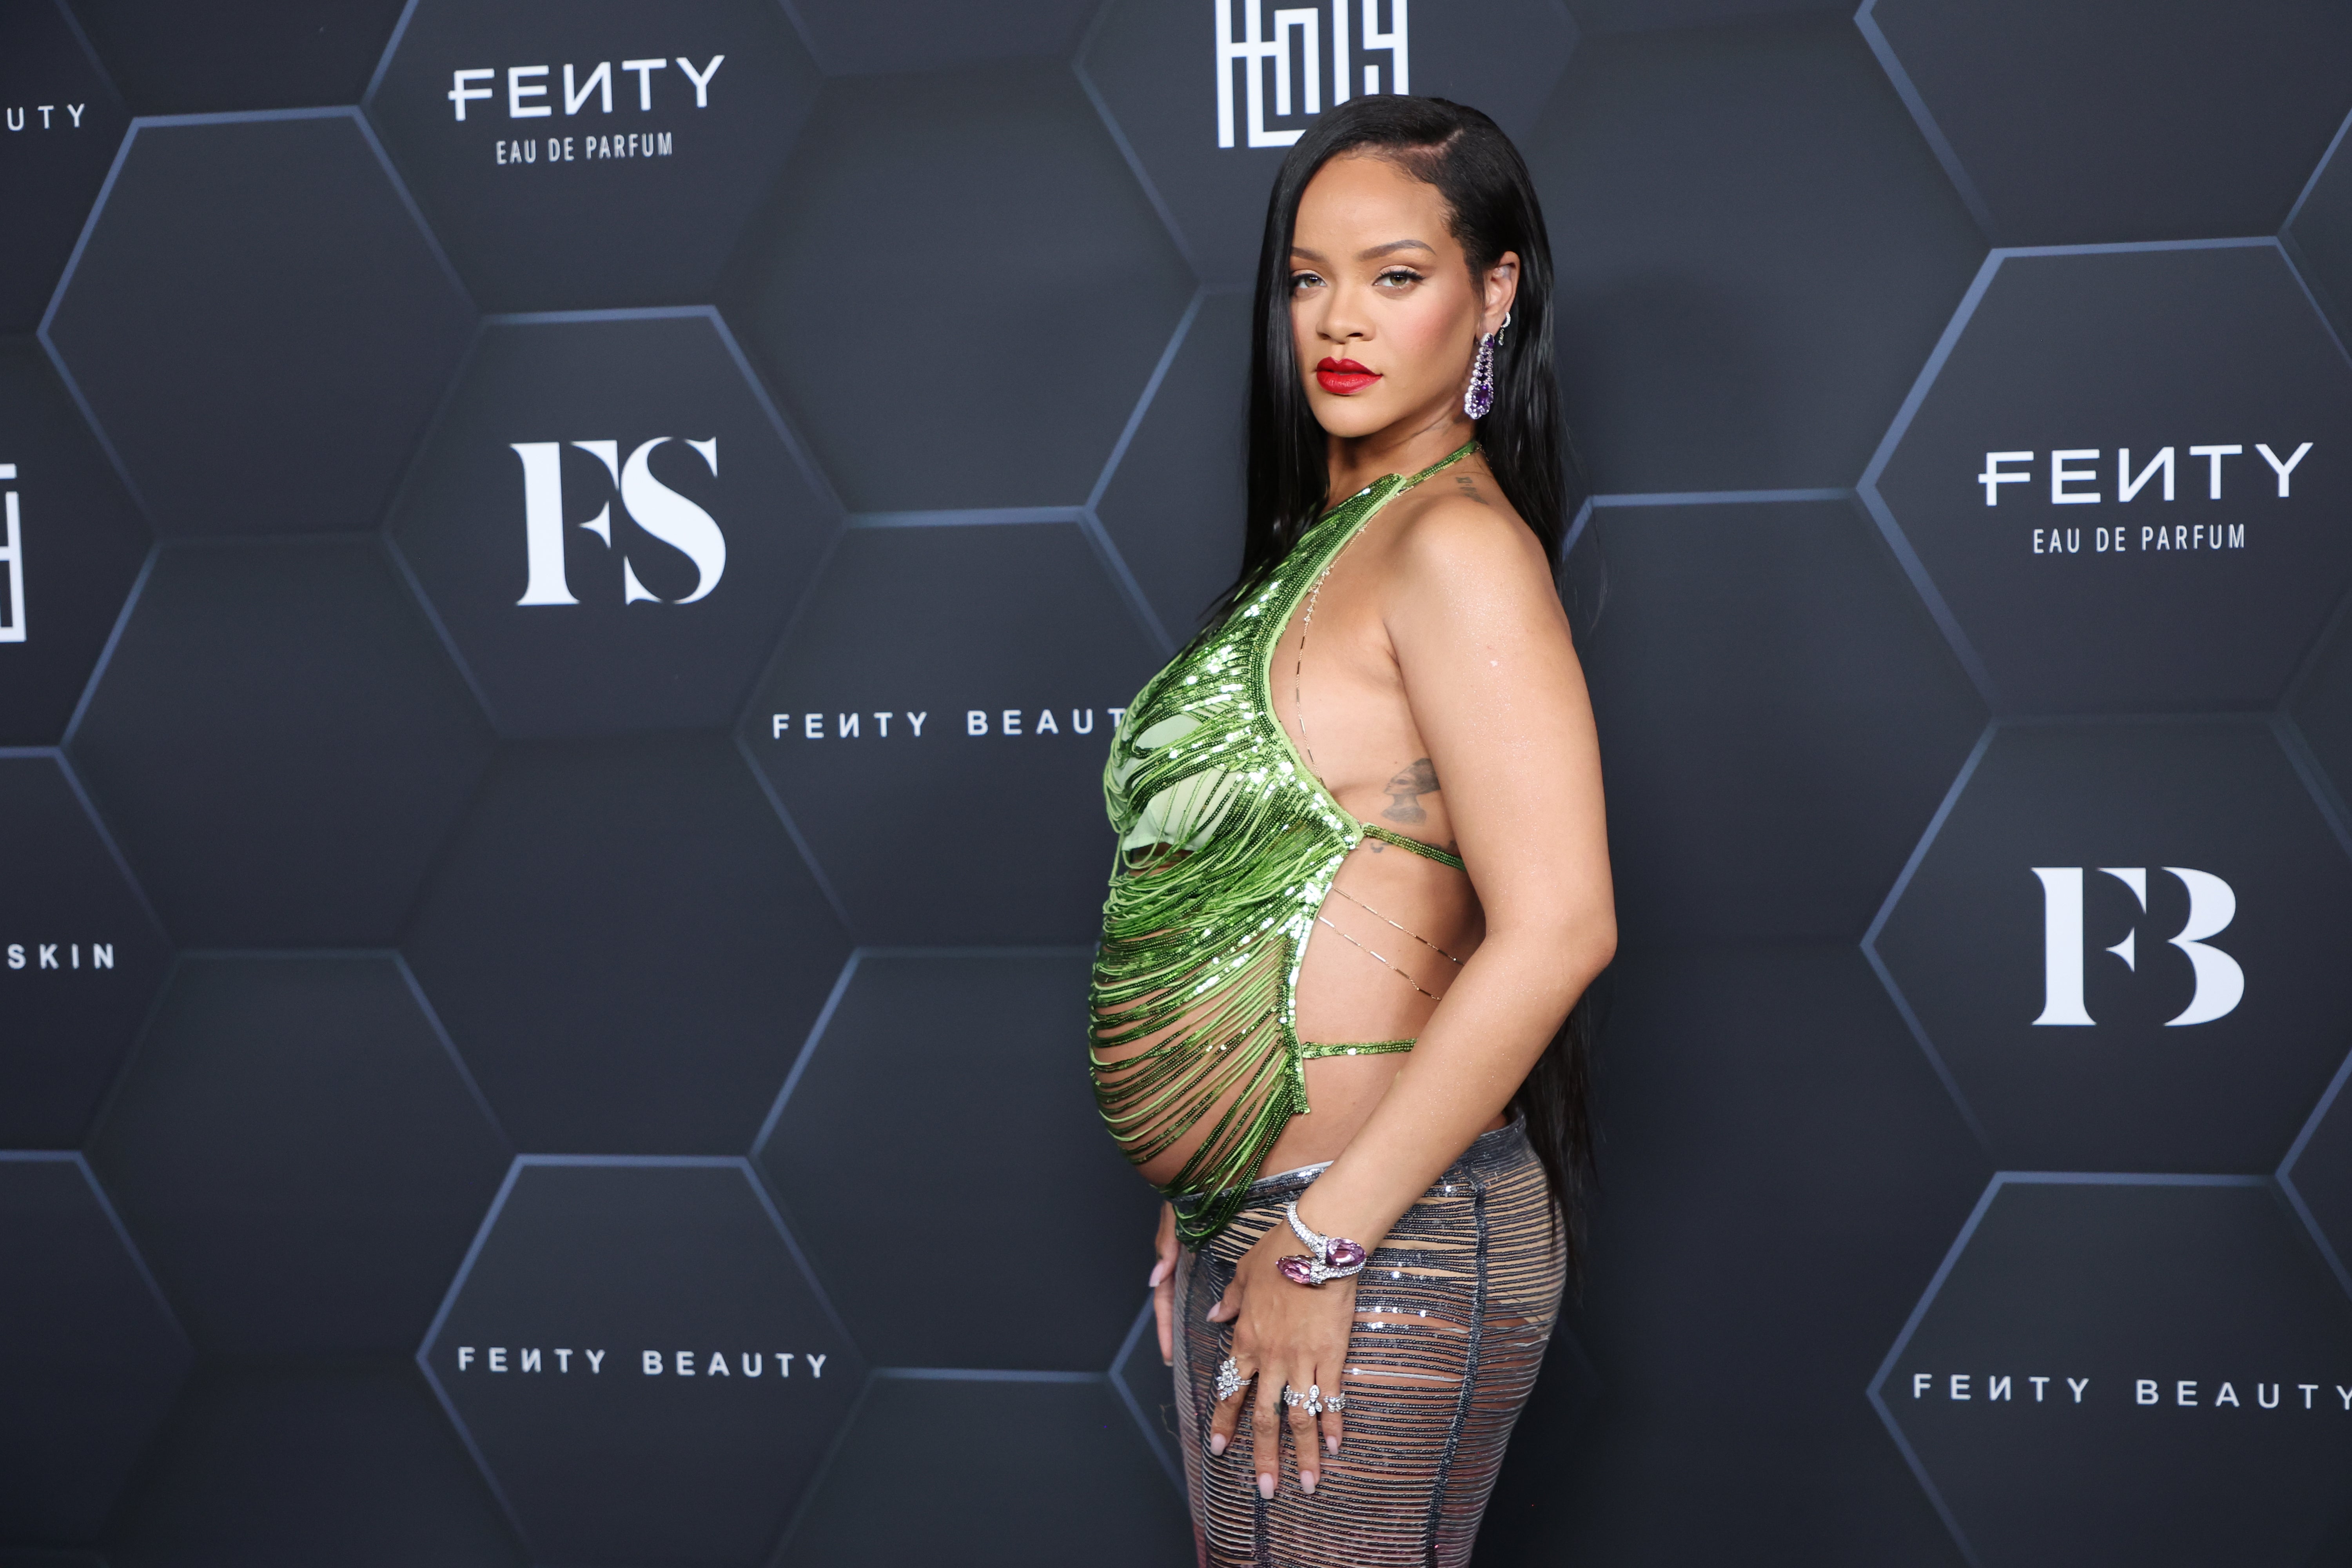 Rihannas sexy maternity looks receive praise